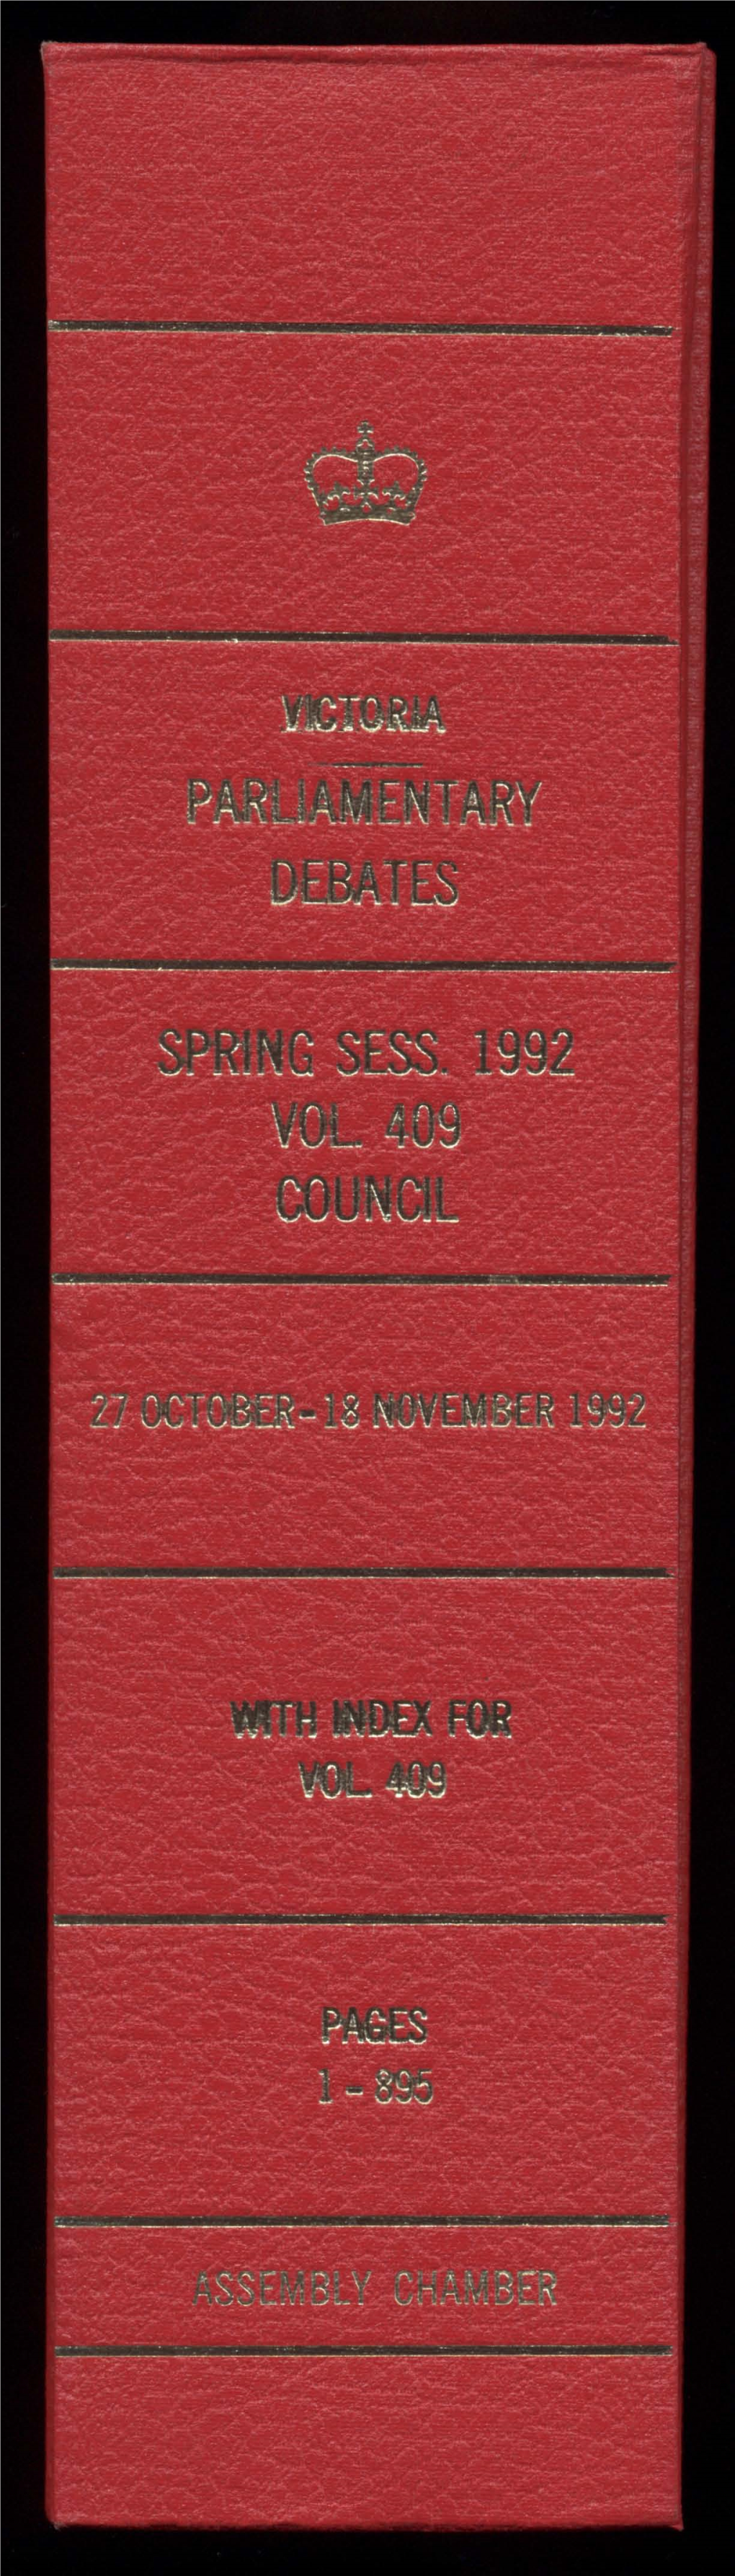 27 October 1992 to 18 November 1992J